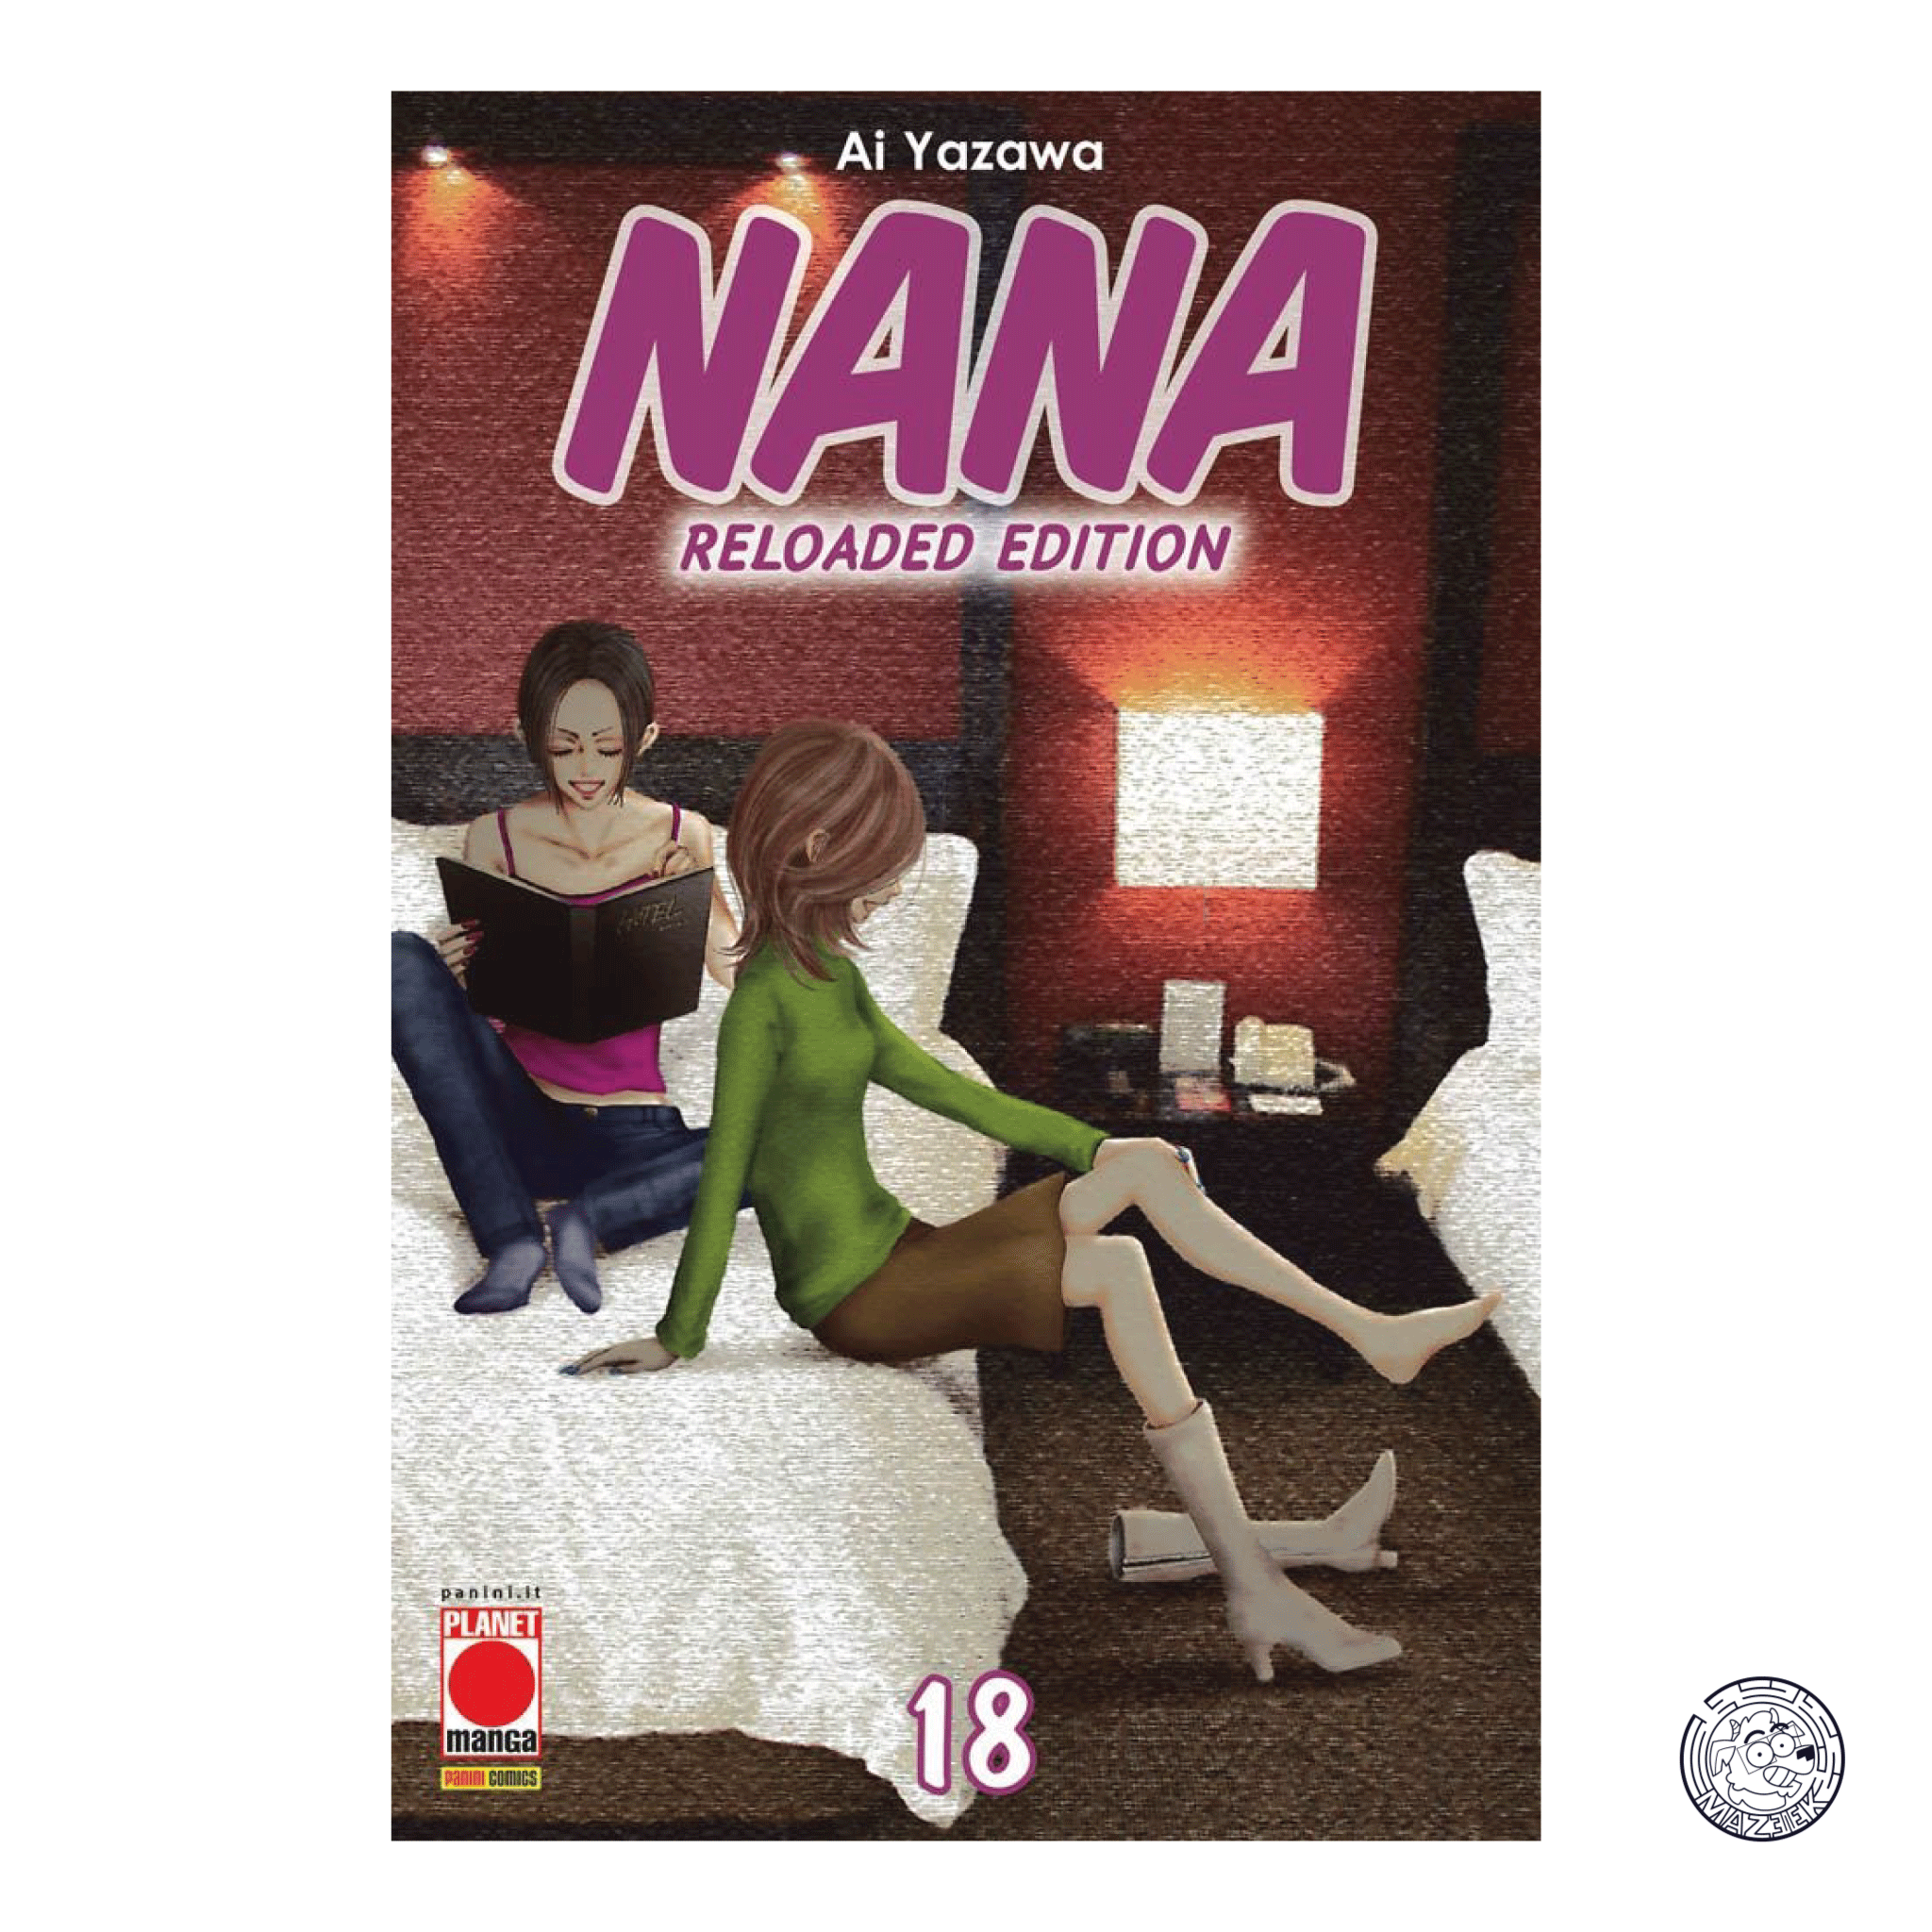 Nana Reloaded Edition 18 - Reprint 1